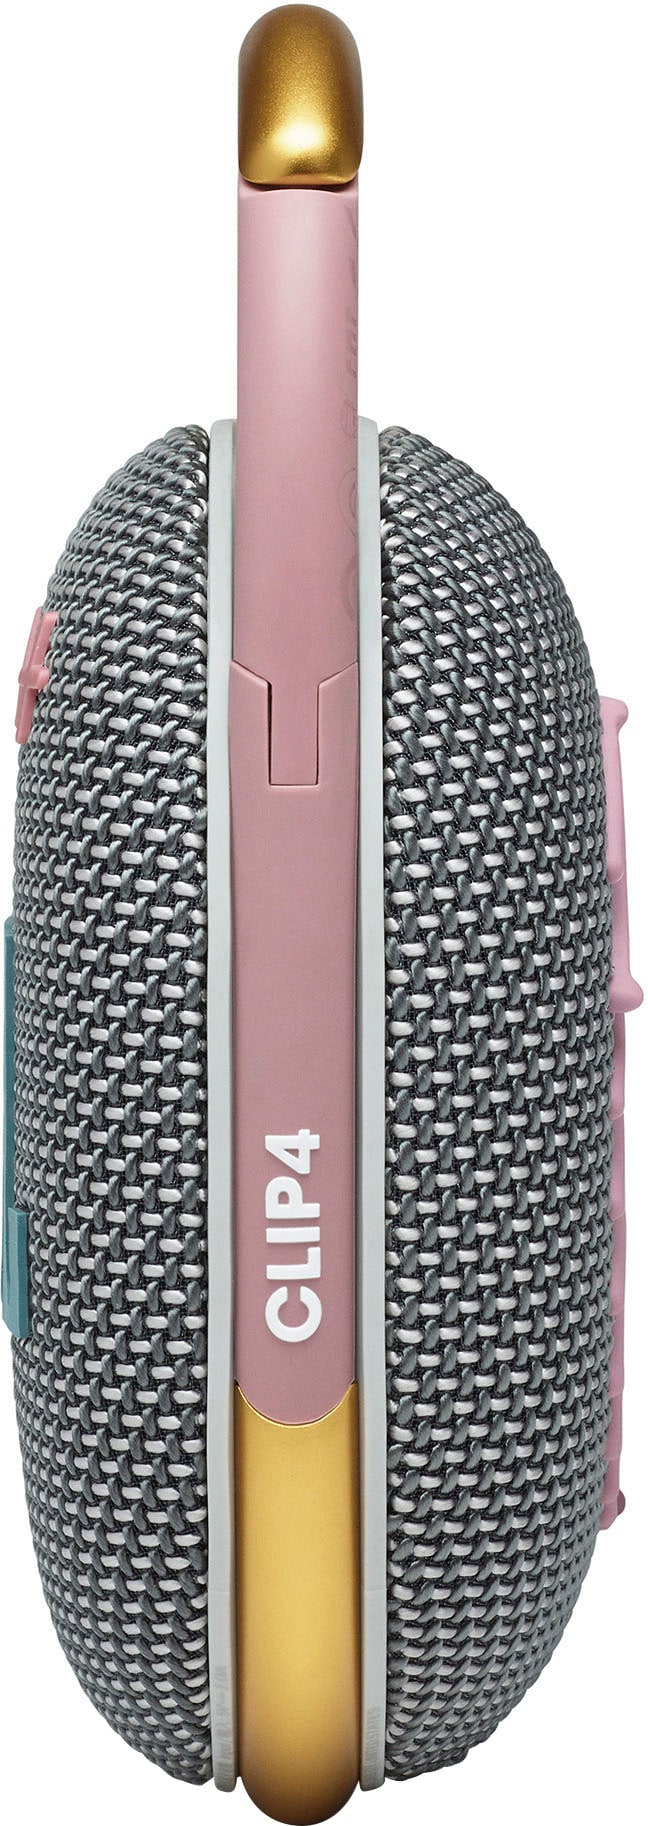 JBL - CLIP4 Portable Bluetooth Speaker - Gray_5